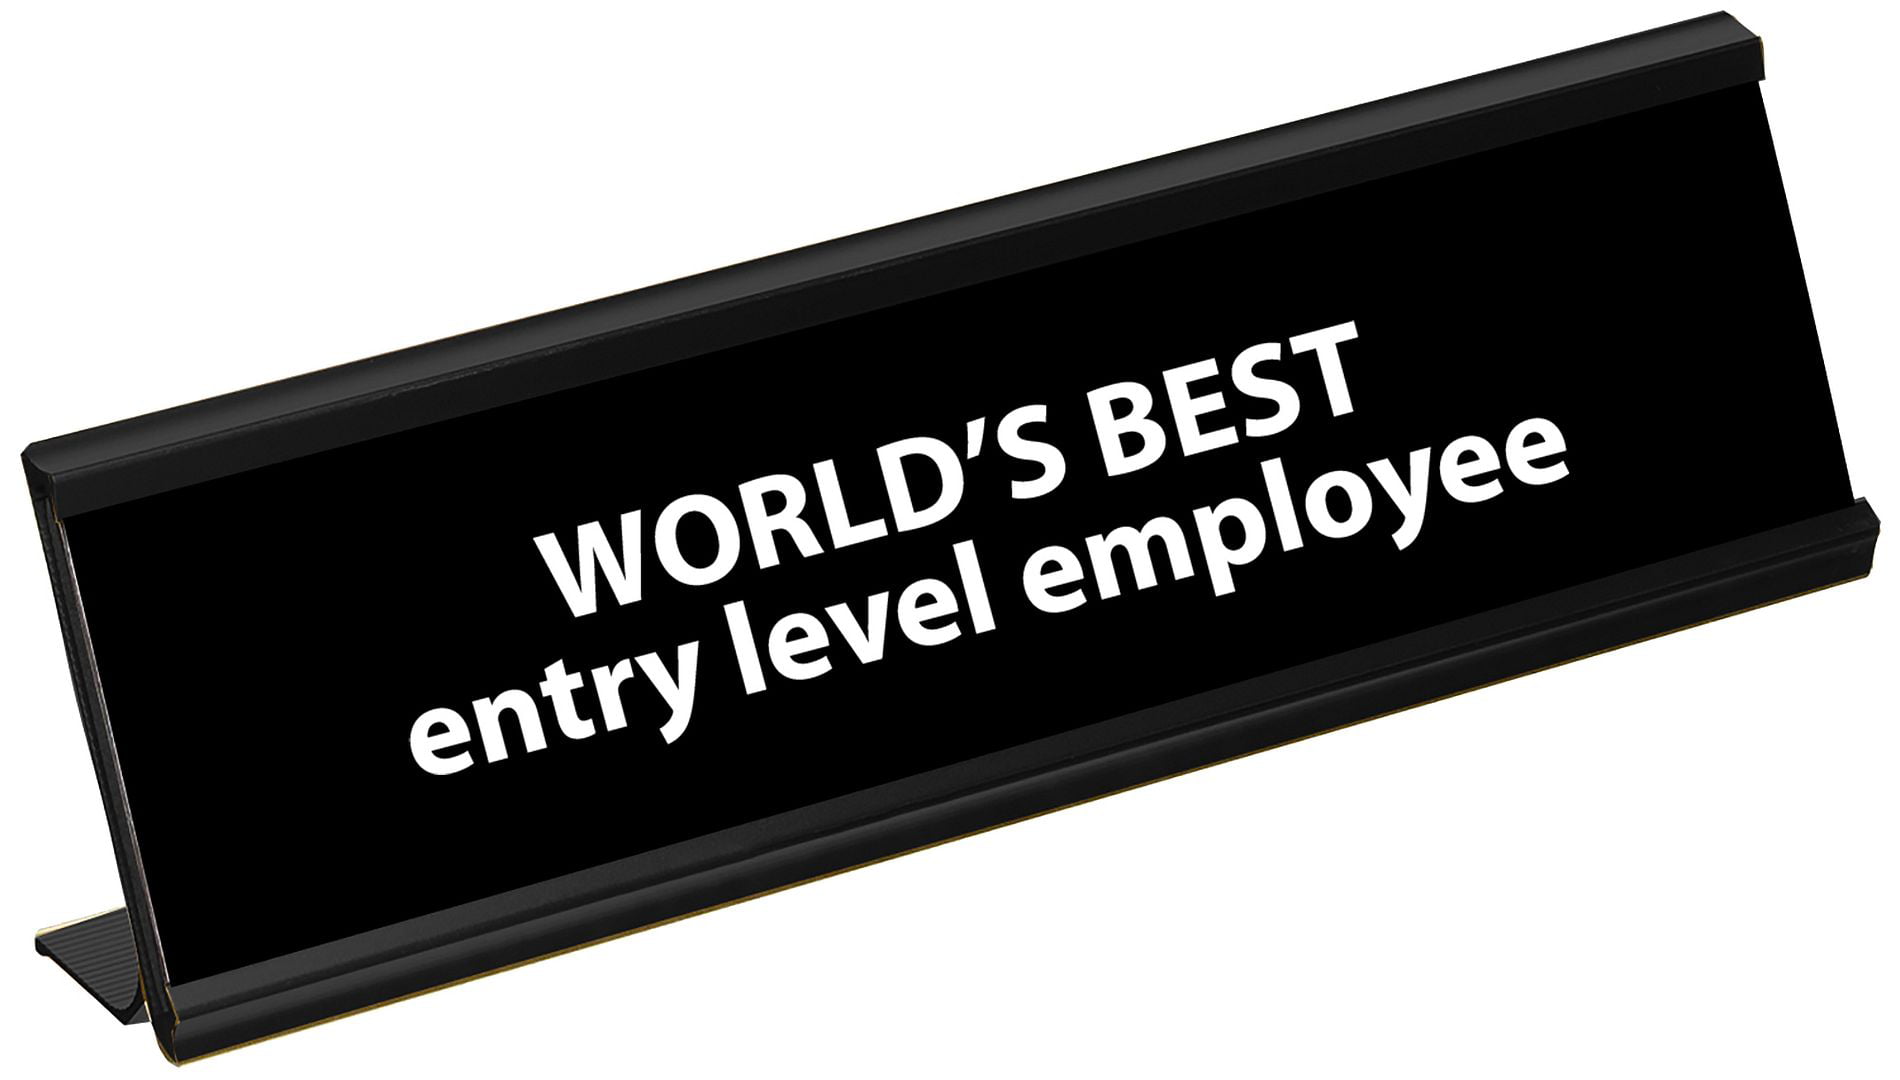 Funny World Best Entry Level Employee Engraved Desk Plate-Black/Black ...